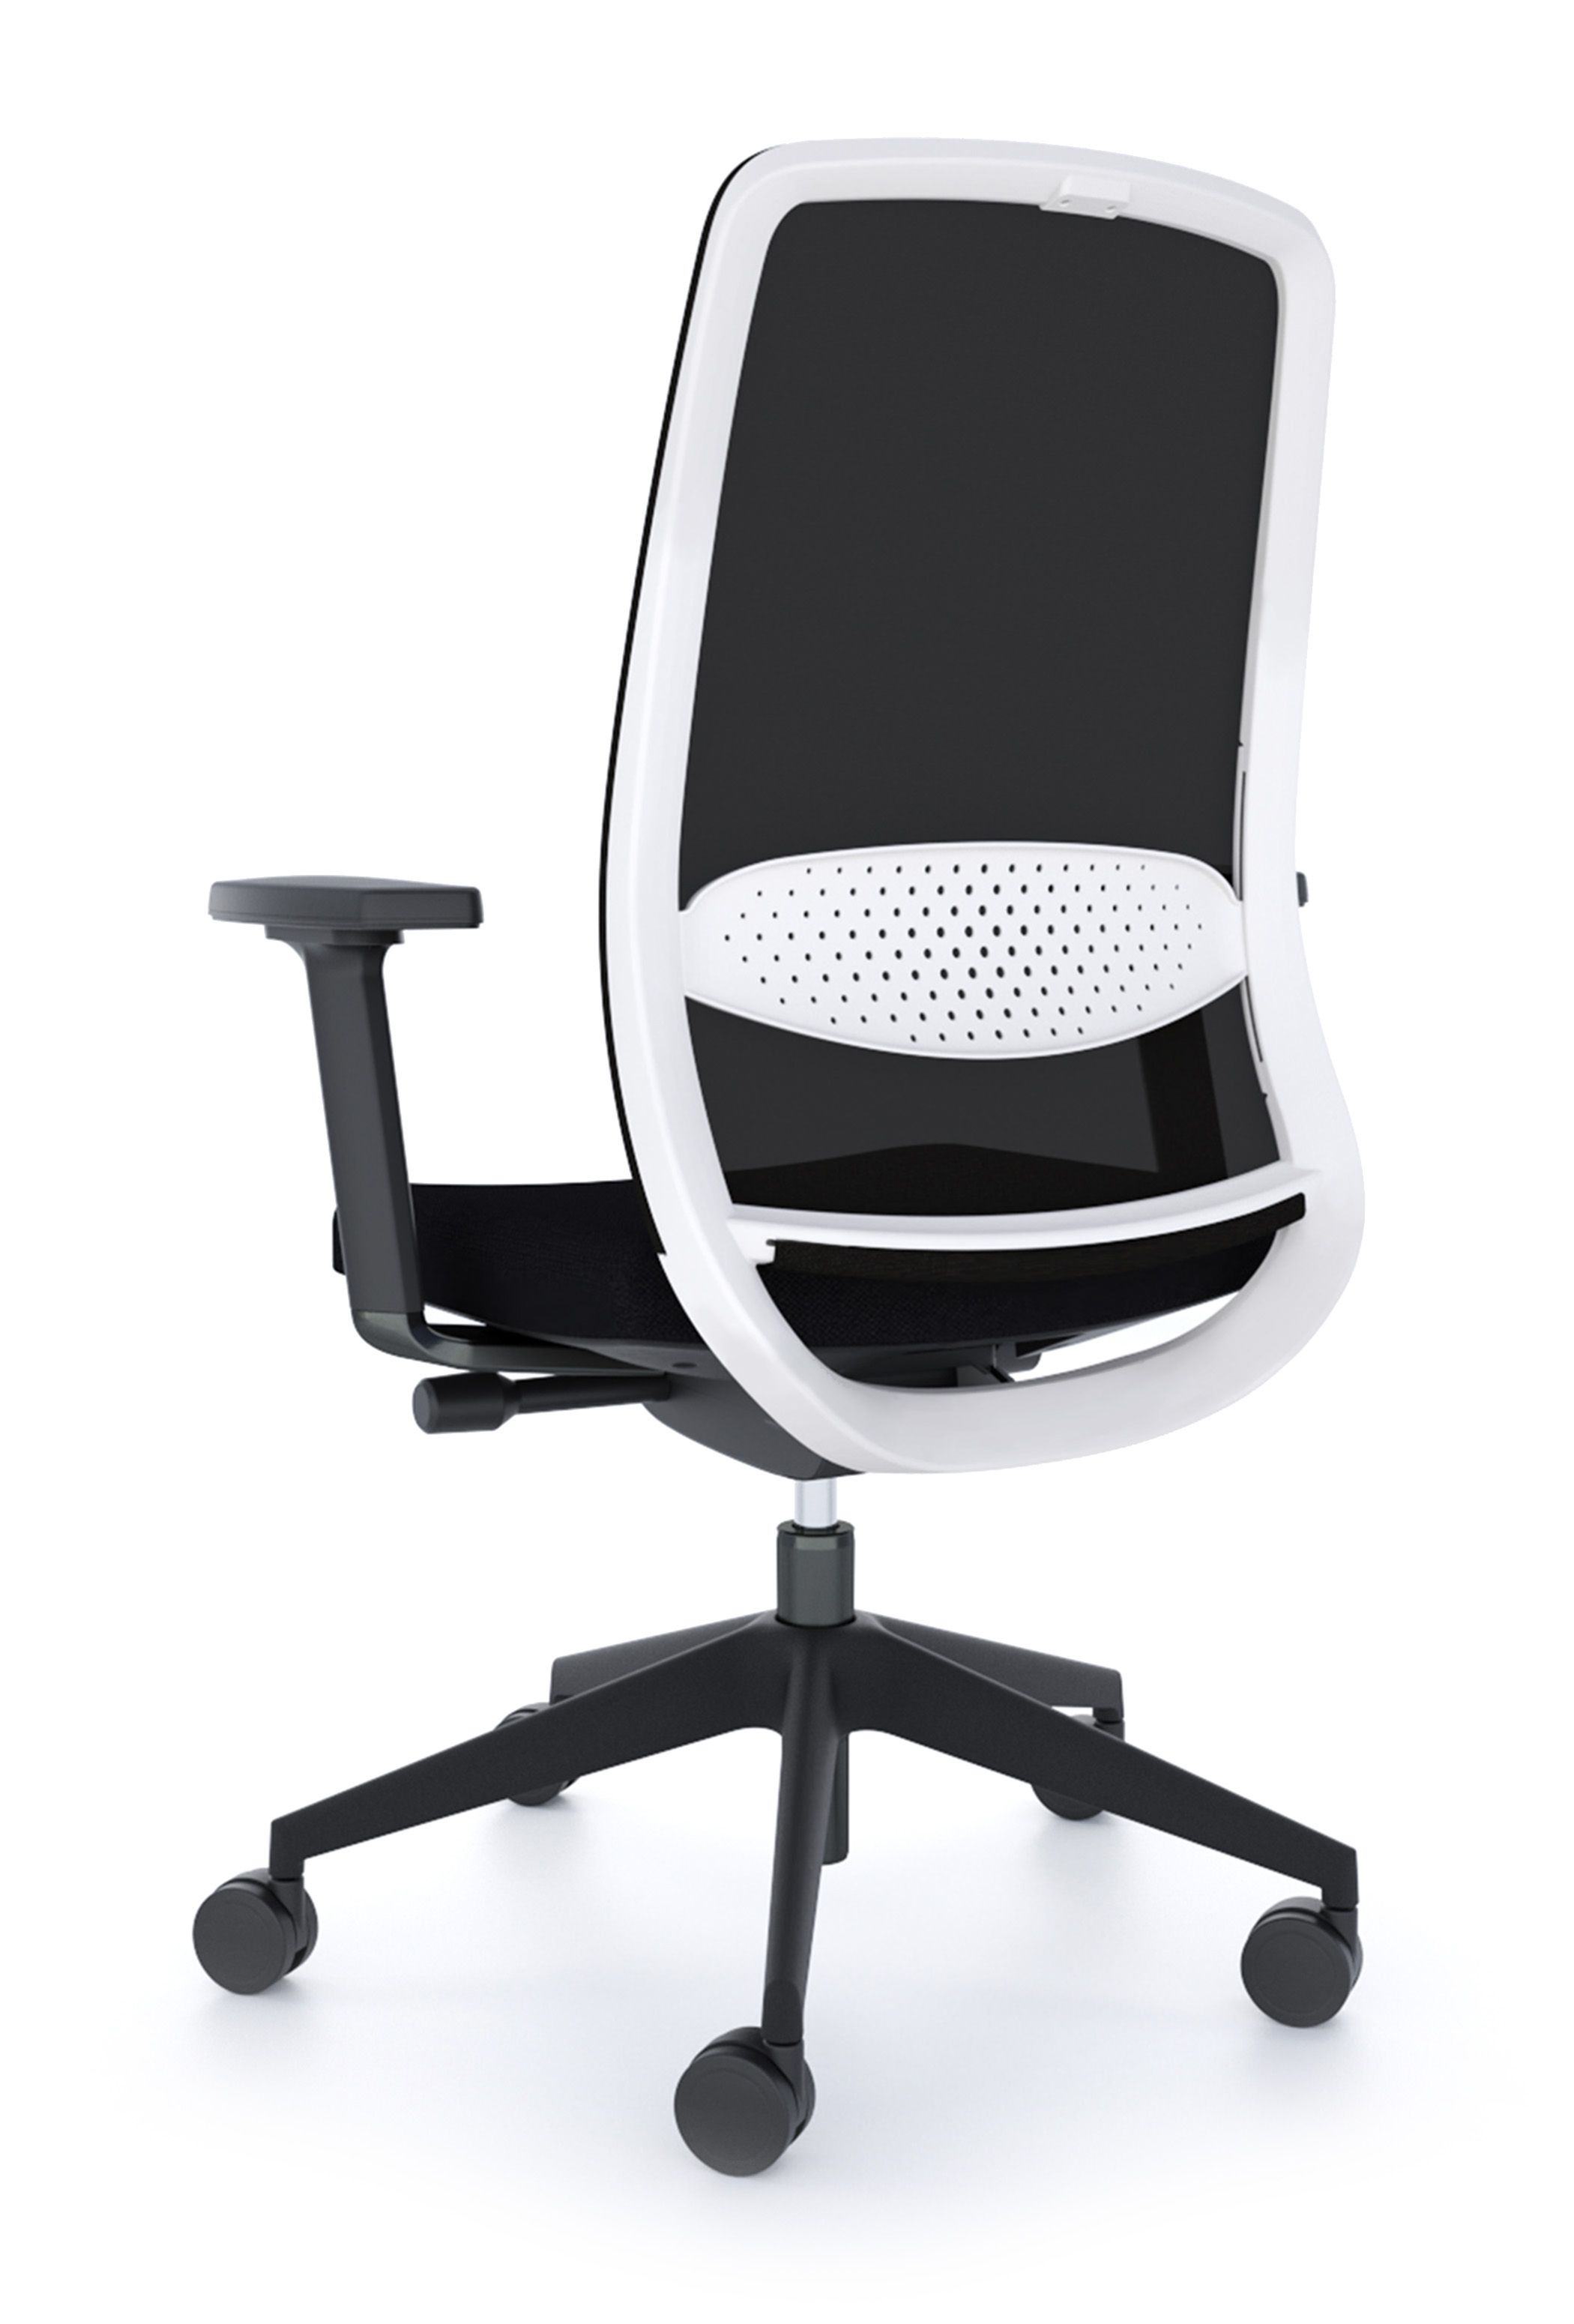 WS - N12 task chair - White&Black (Back angle)